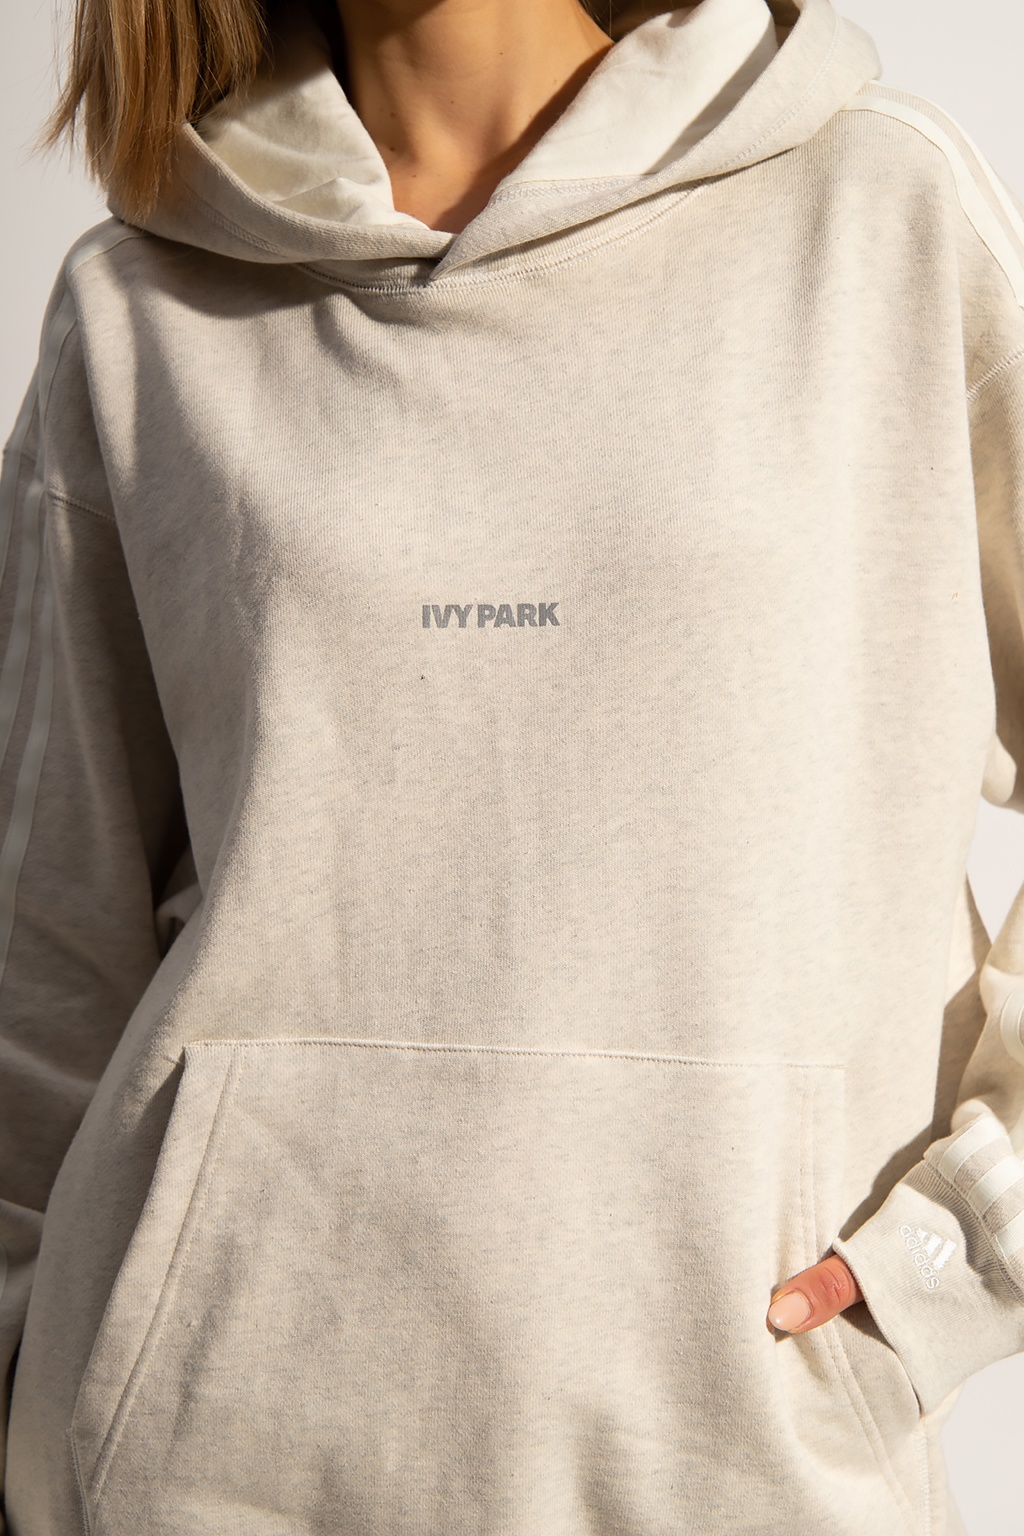 Adidas Ivy Park アディダス オリジナルス×IVY PARK